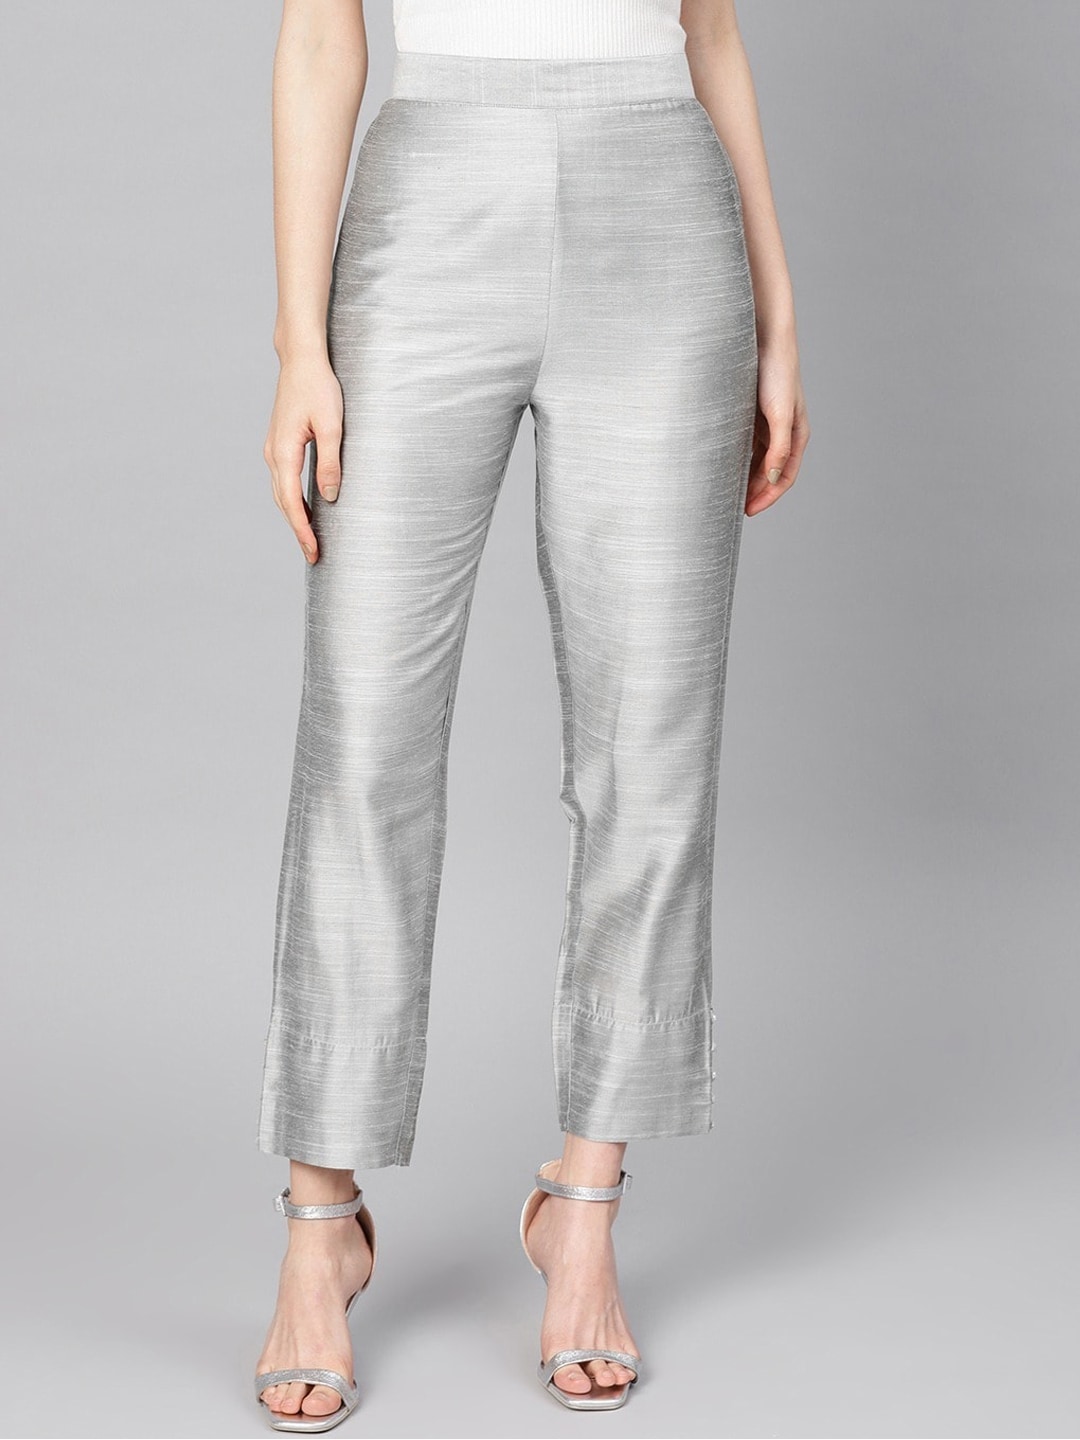 Varanga Women Silver-Toned Textured Trousers Price in India